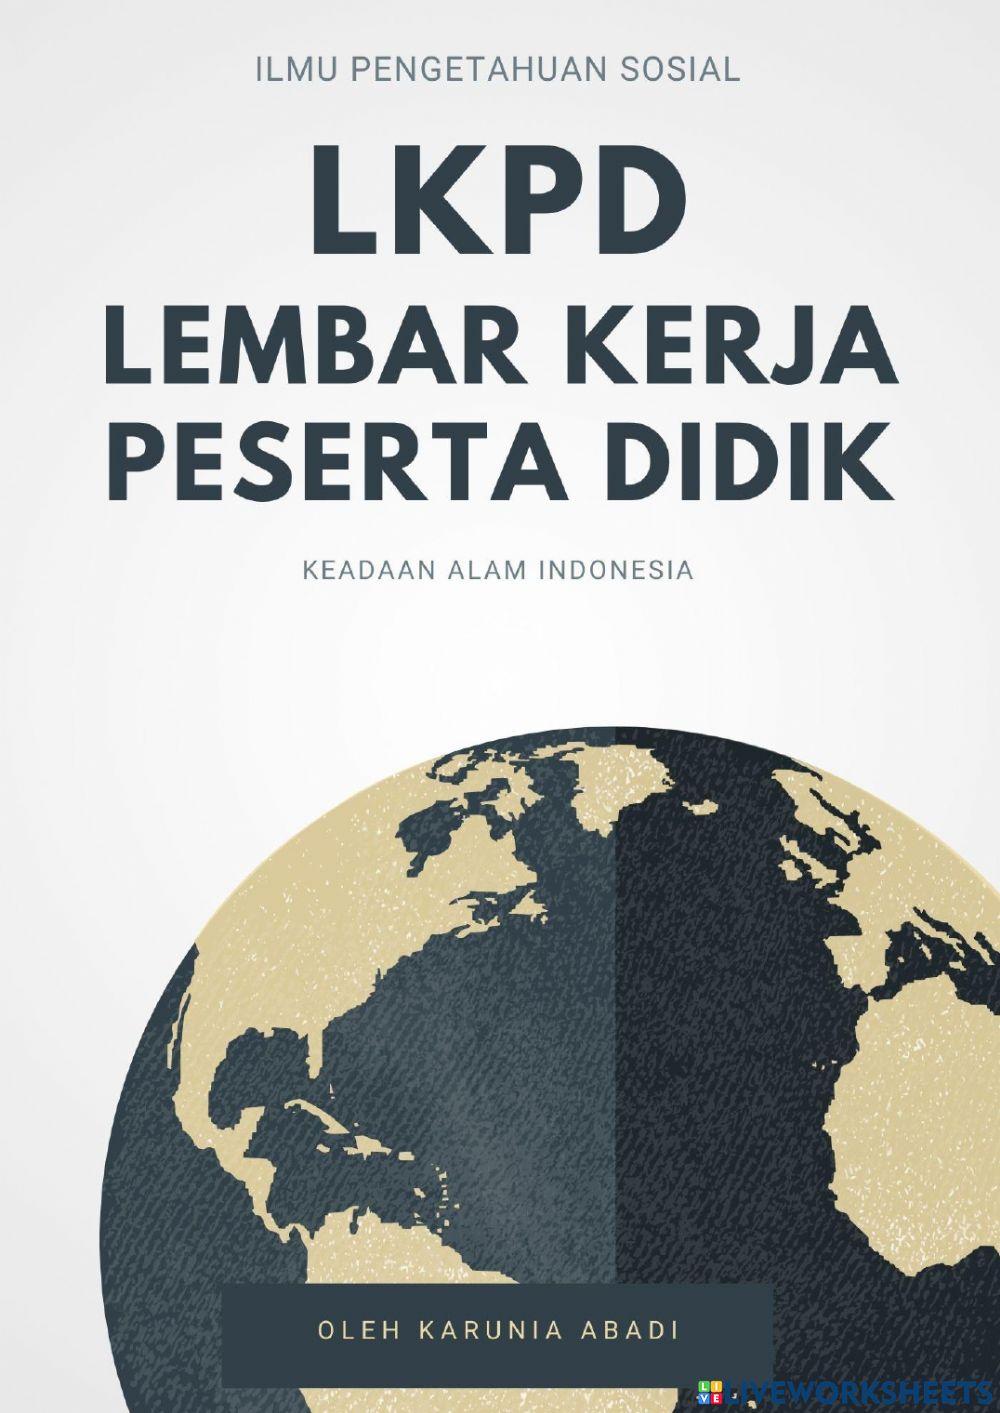 Keadaan Alam Indonesia